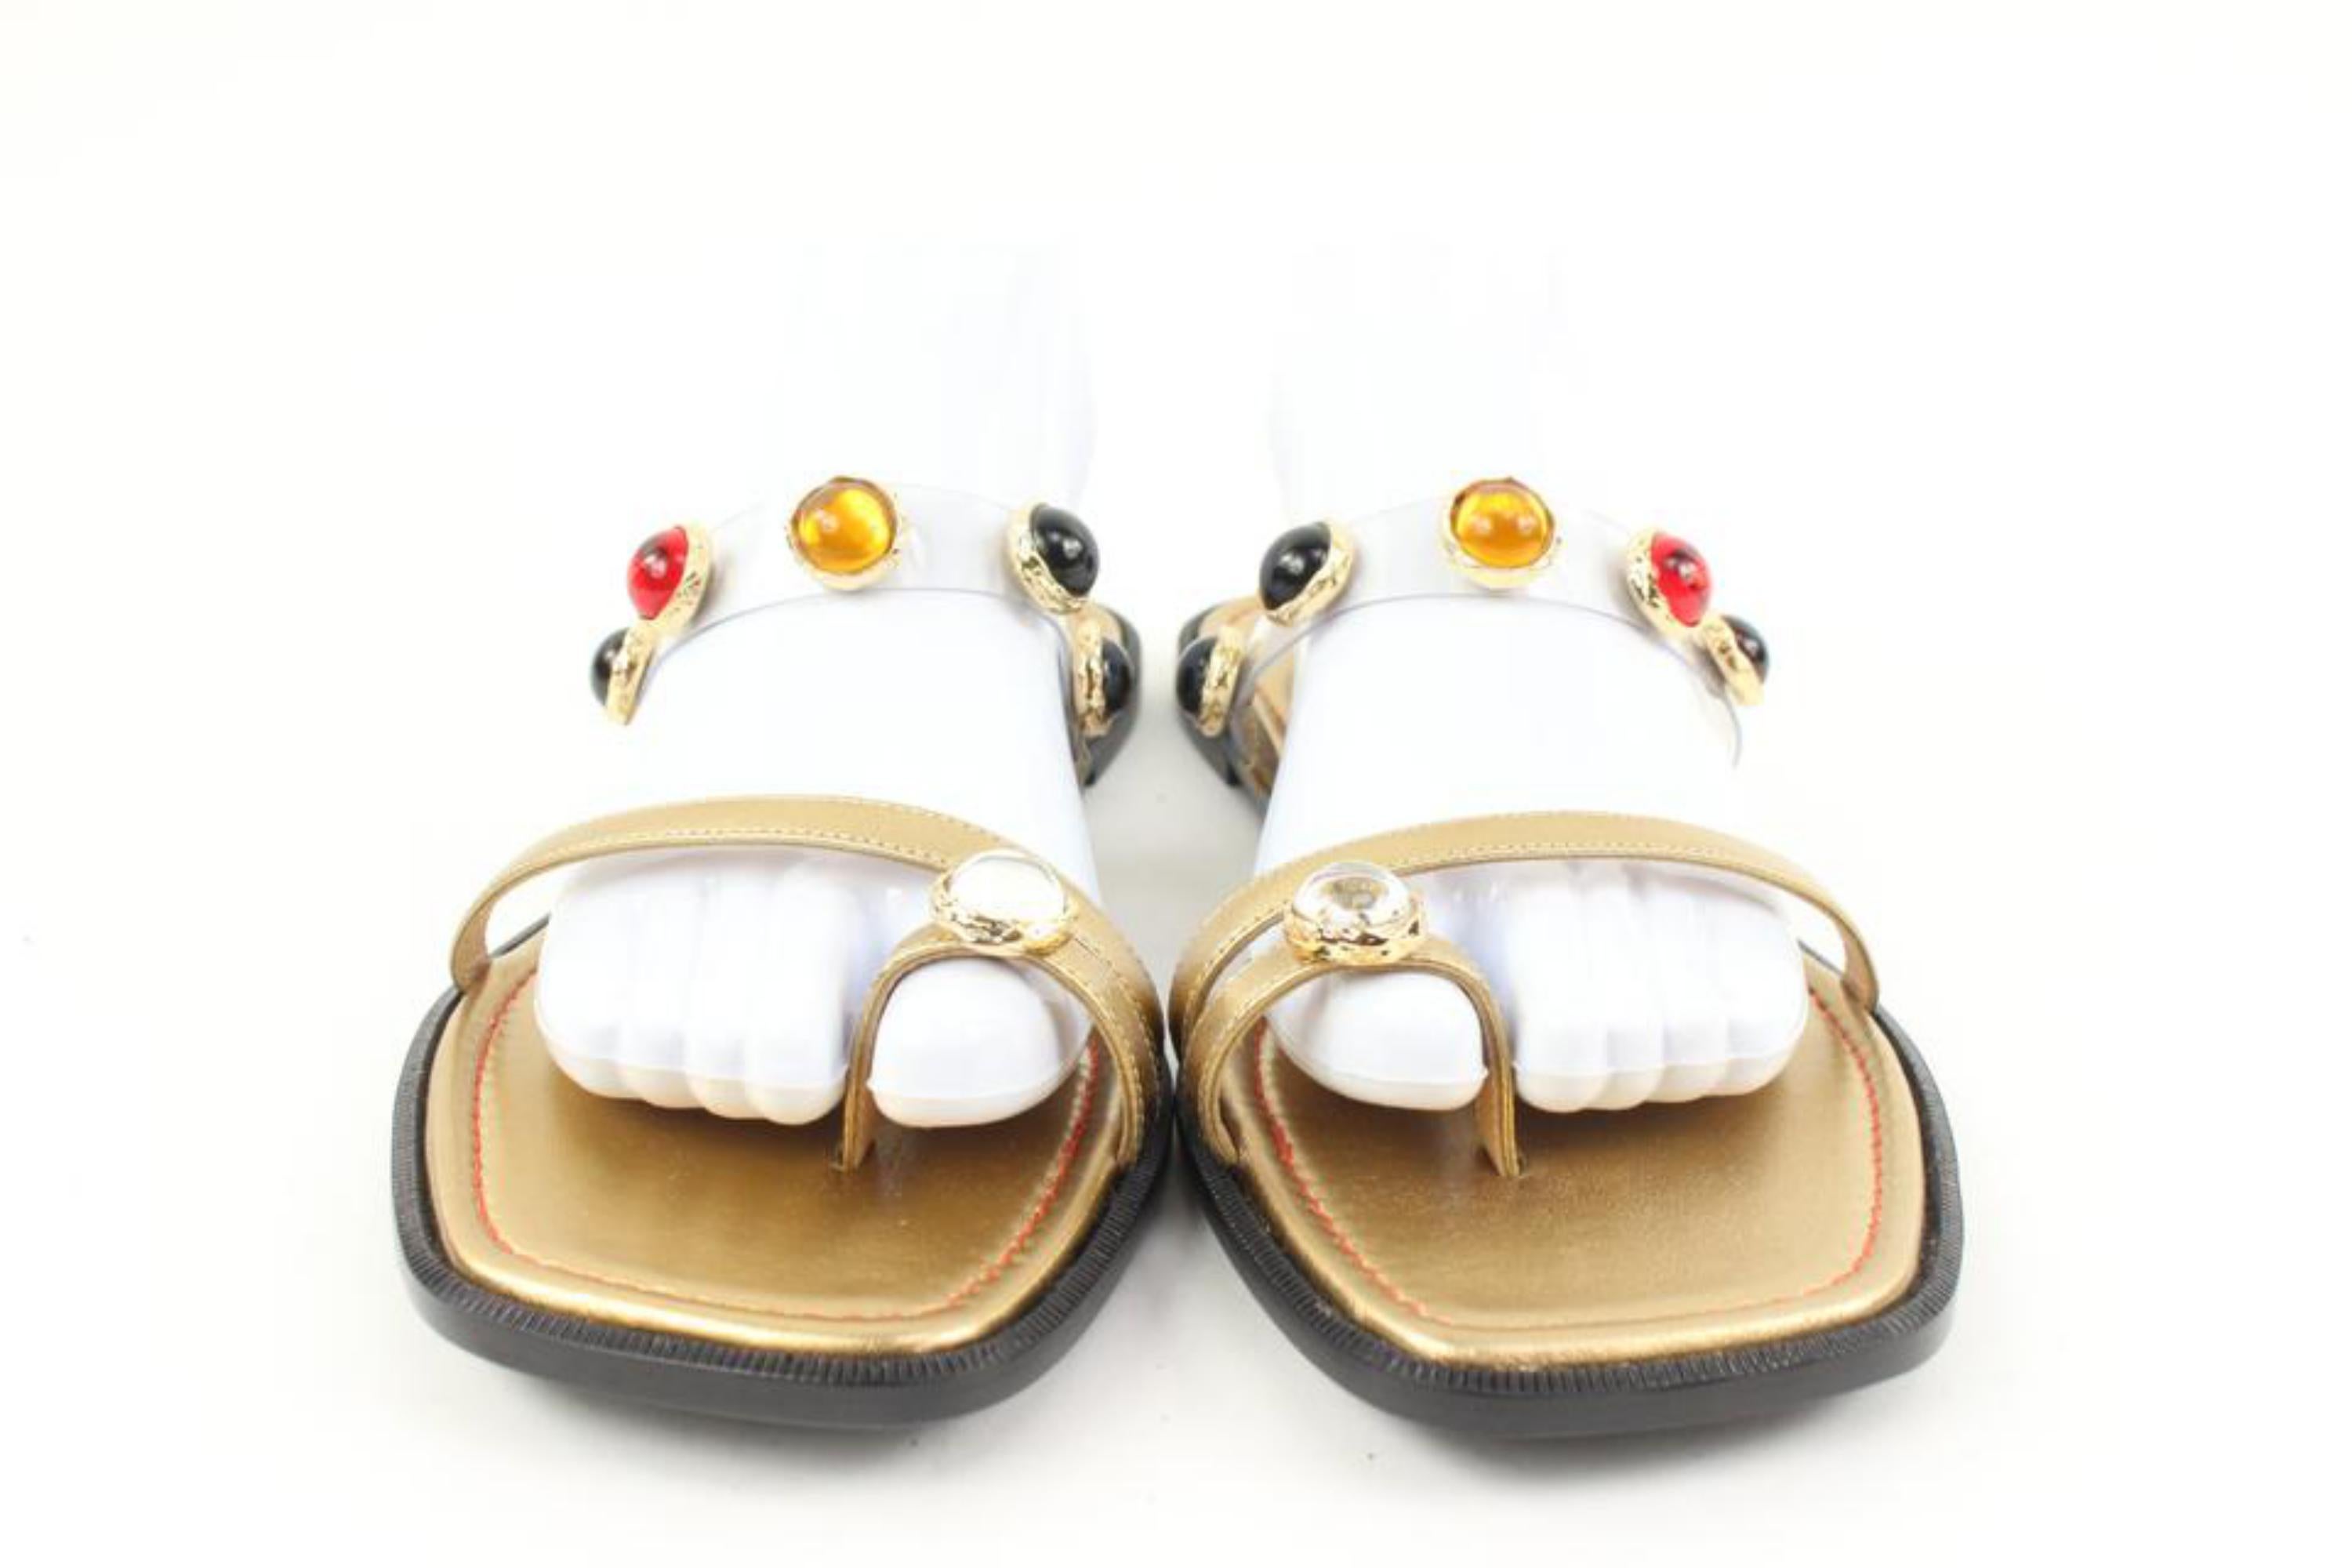 Beige Nodaleto Size 39 Bulla Salem Flat Jeweled Sandals 35n37s For Sale